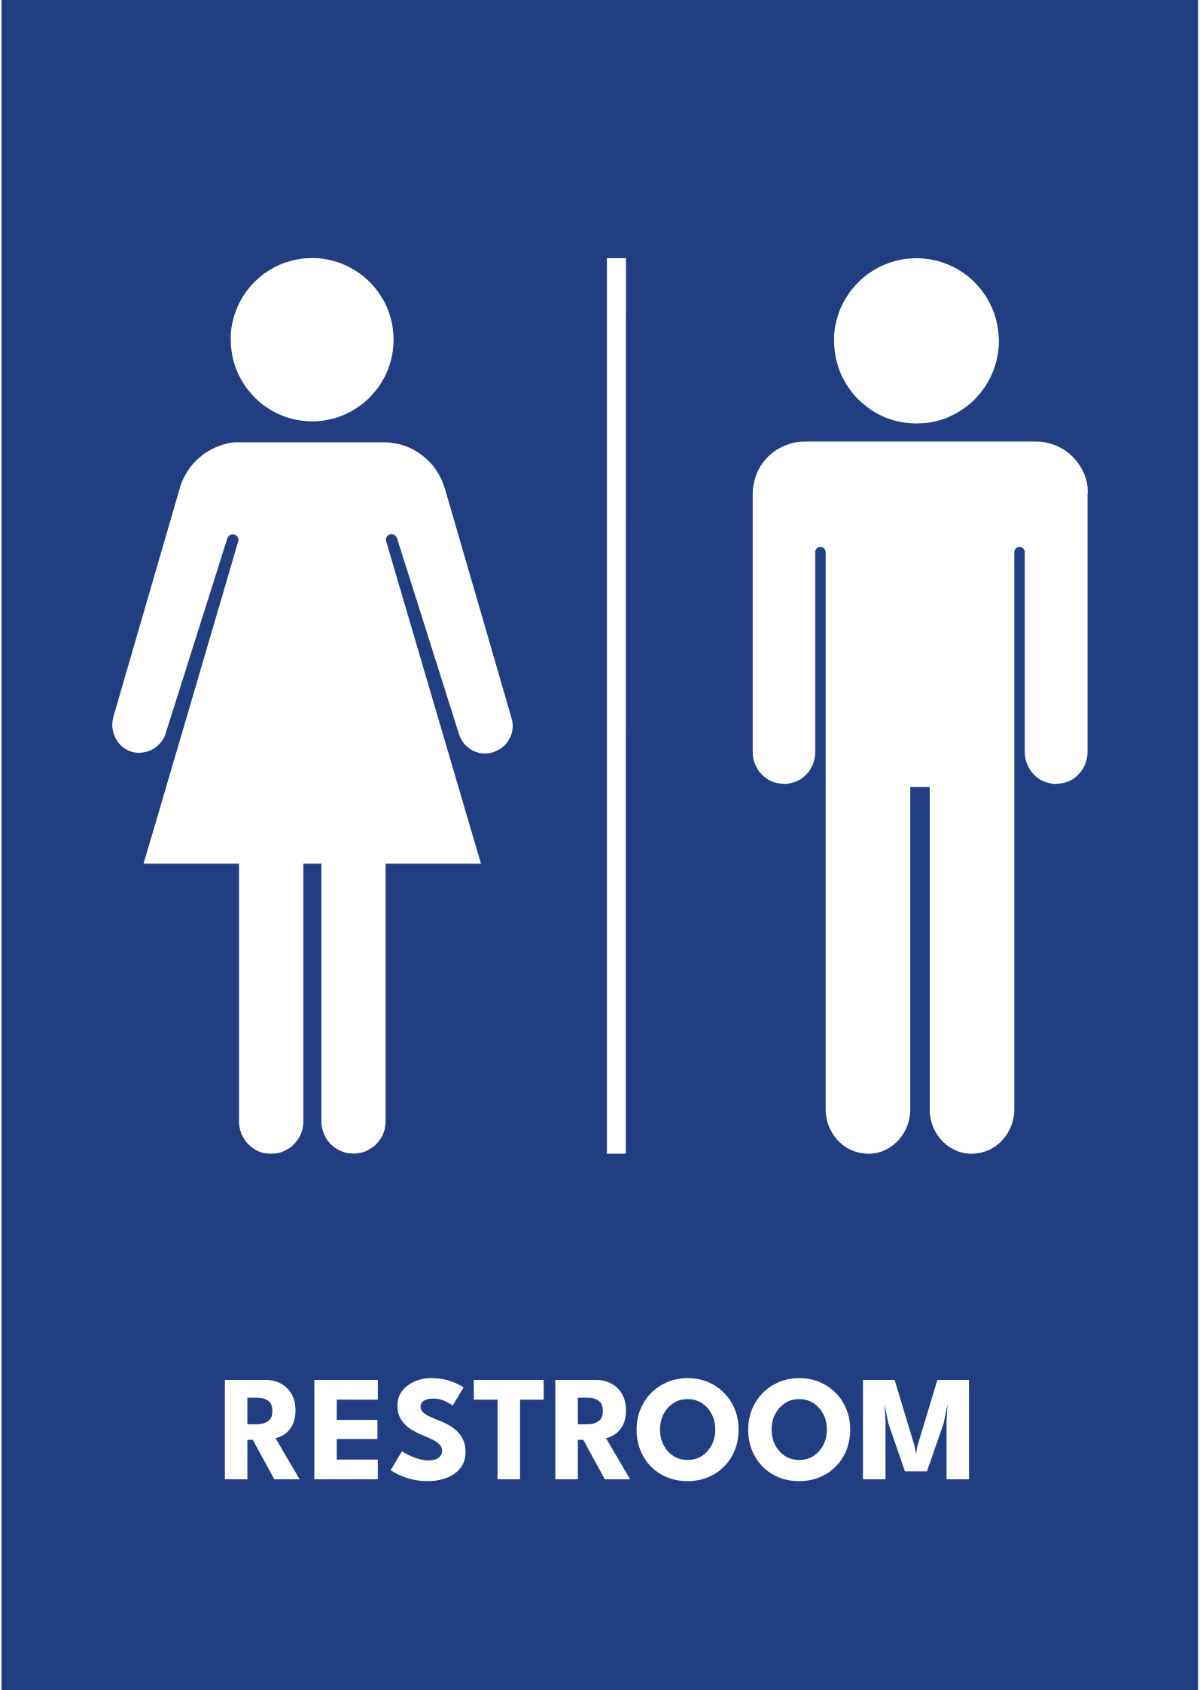 Free School Restrooms Sign Template